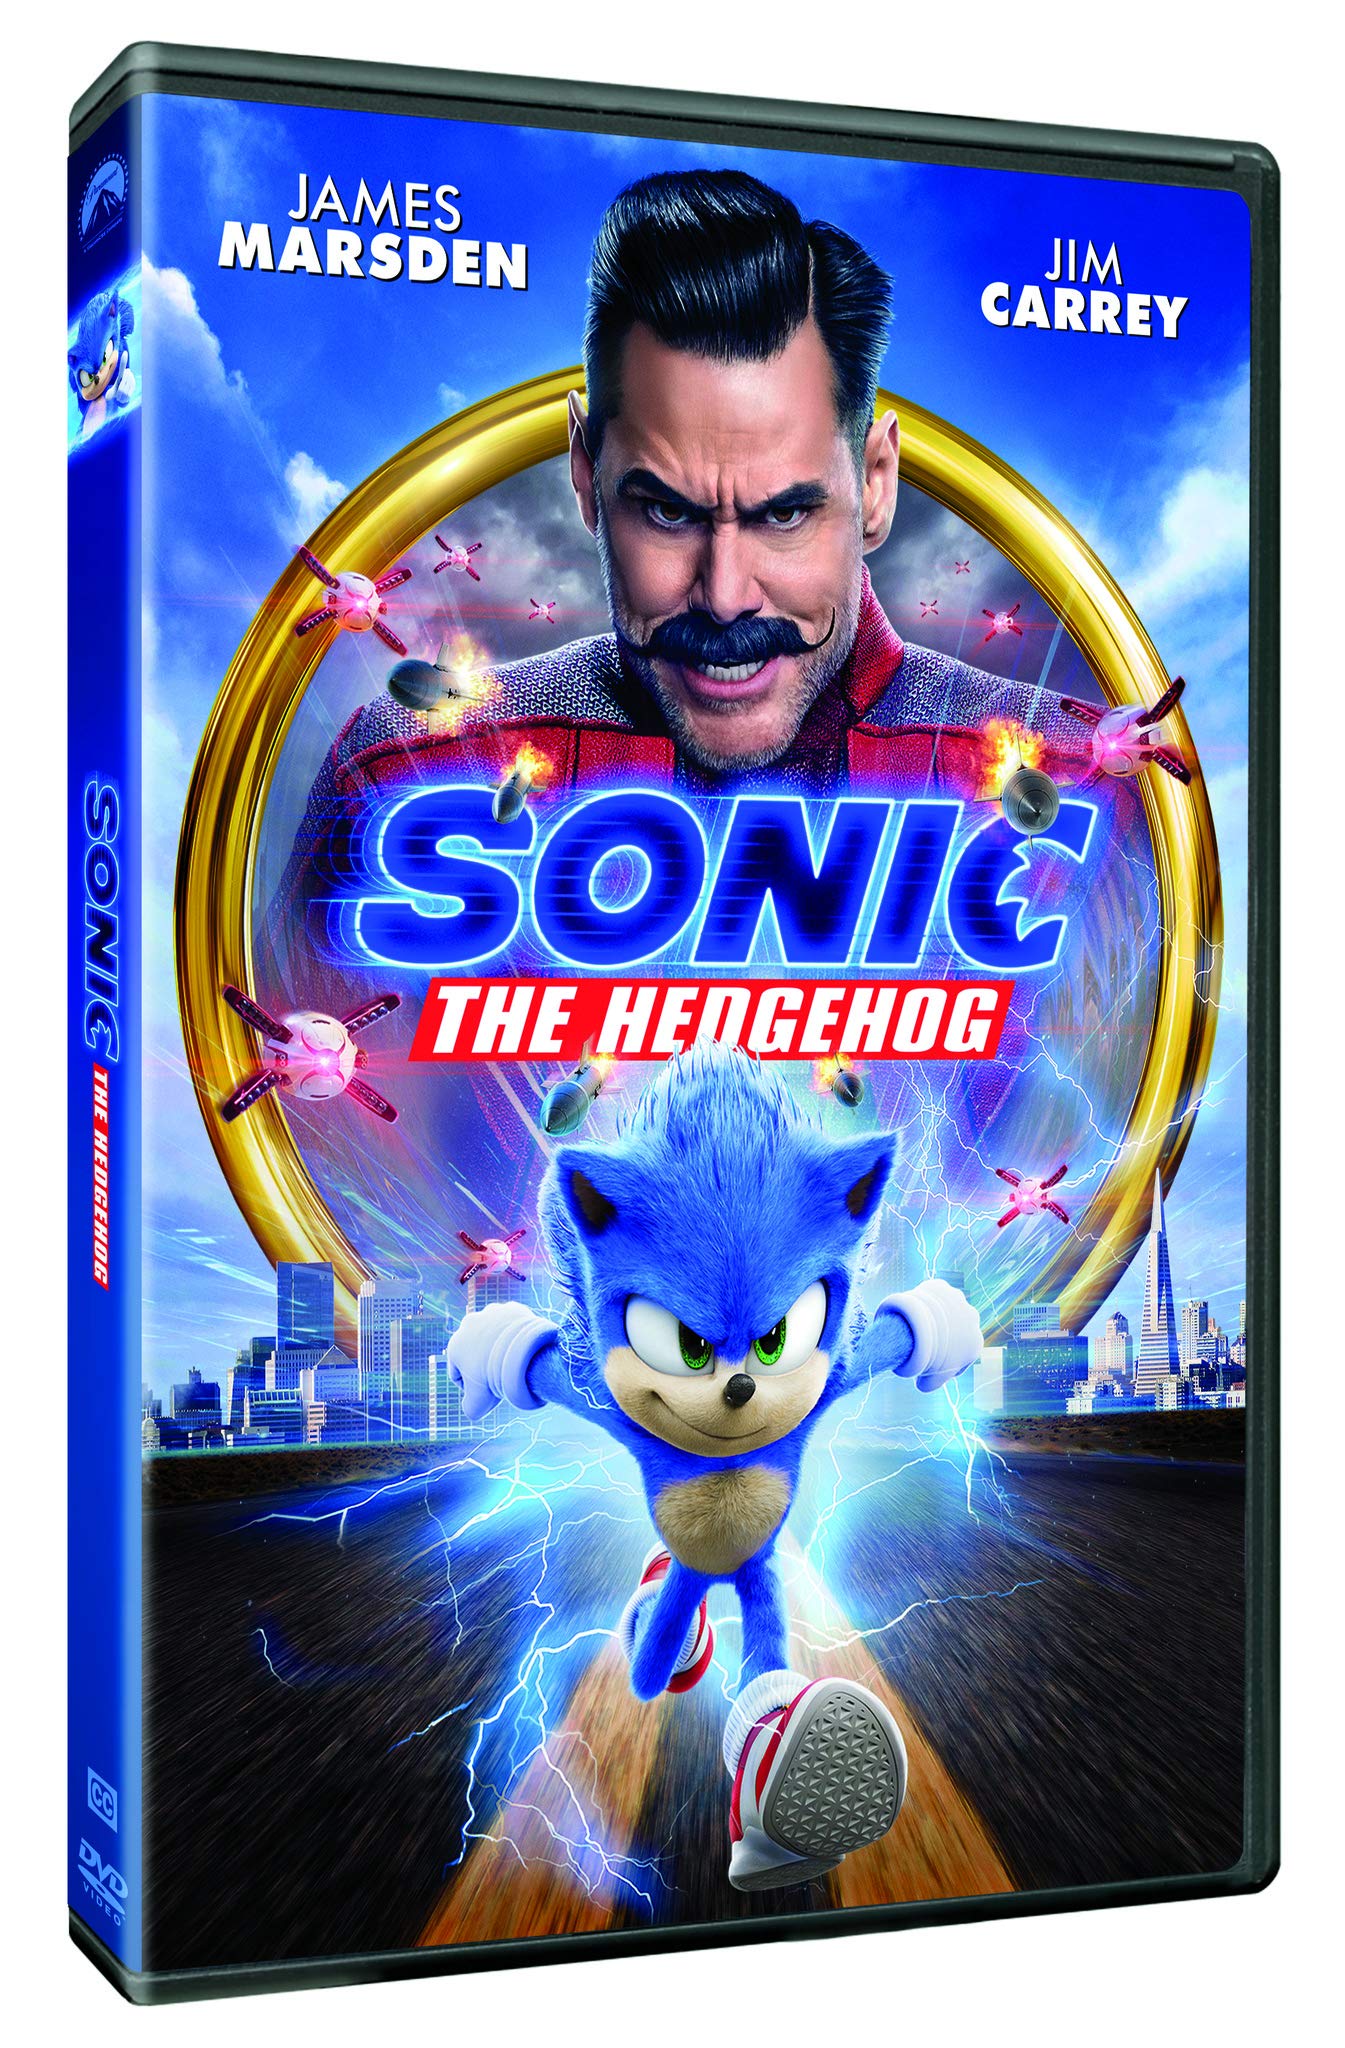 Sonic The Hedgehog DVD  - $7.50